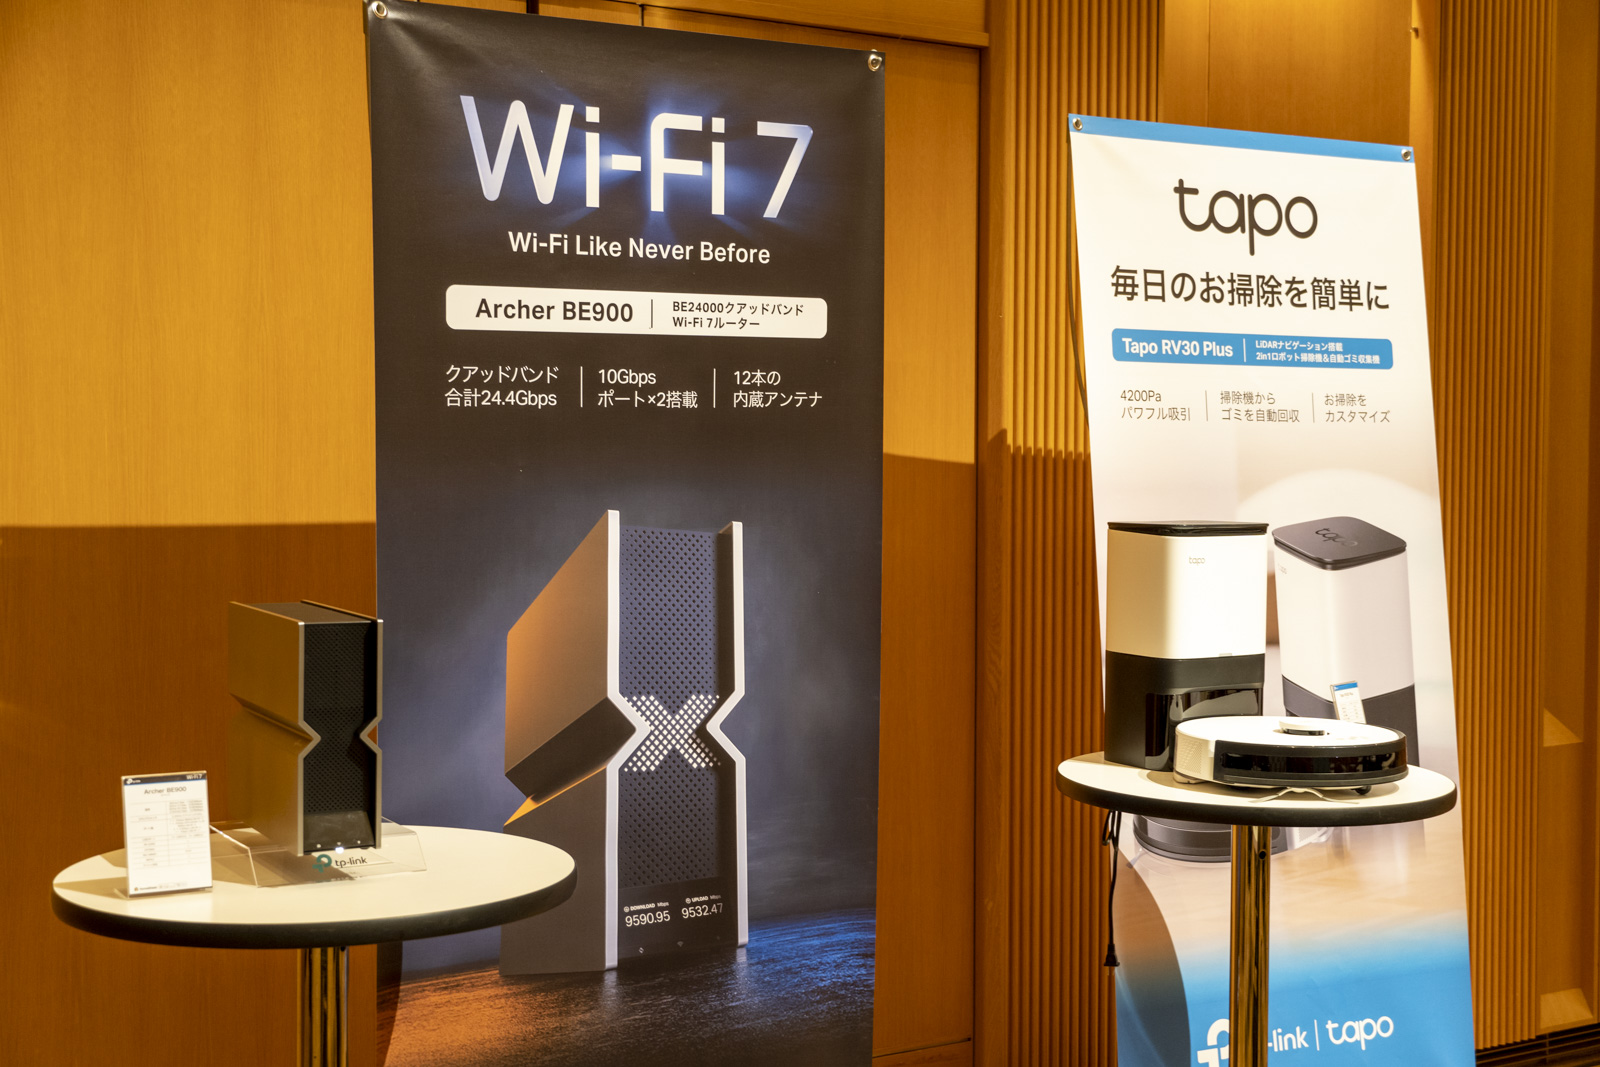 TP-Linkが日本初のWi-Fi 7ルーターを発表、新規参入するロボット掃除機も3月30日より順次発売